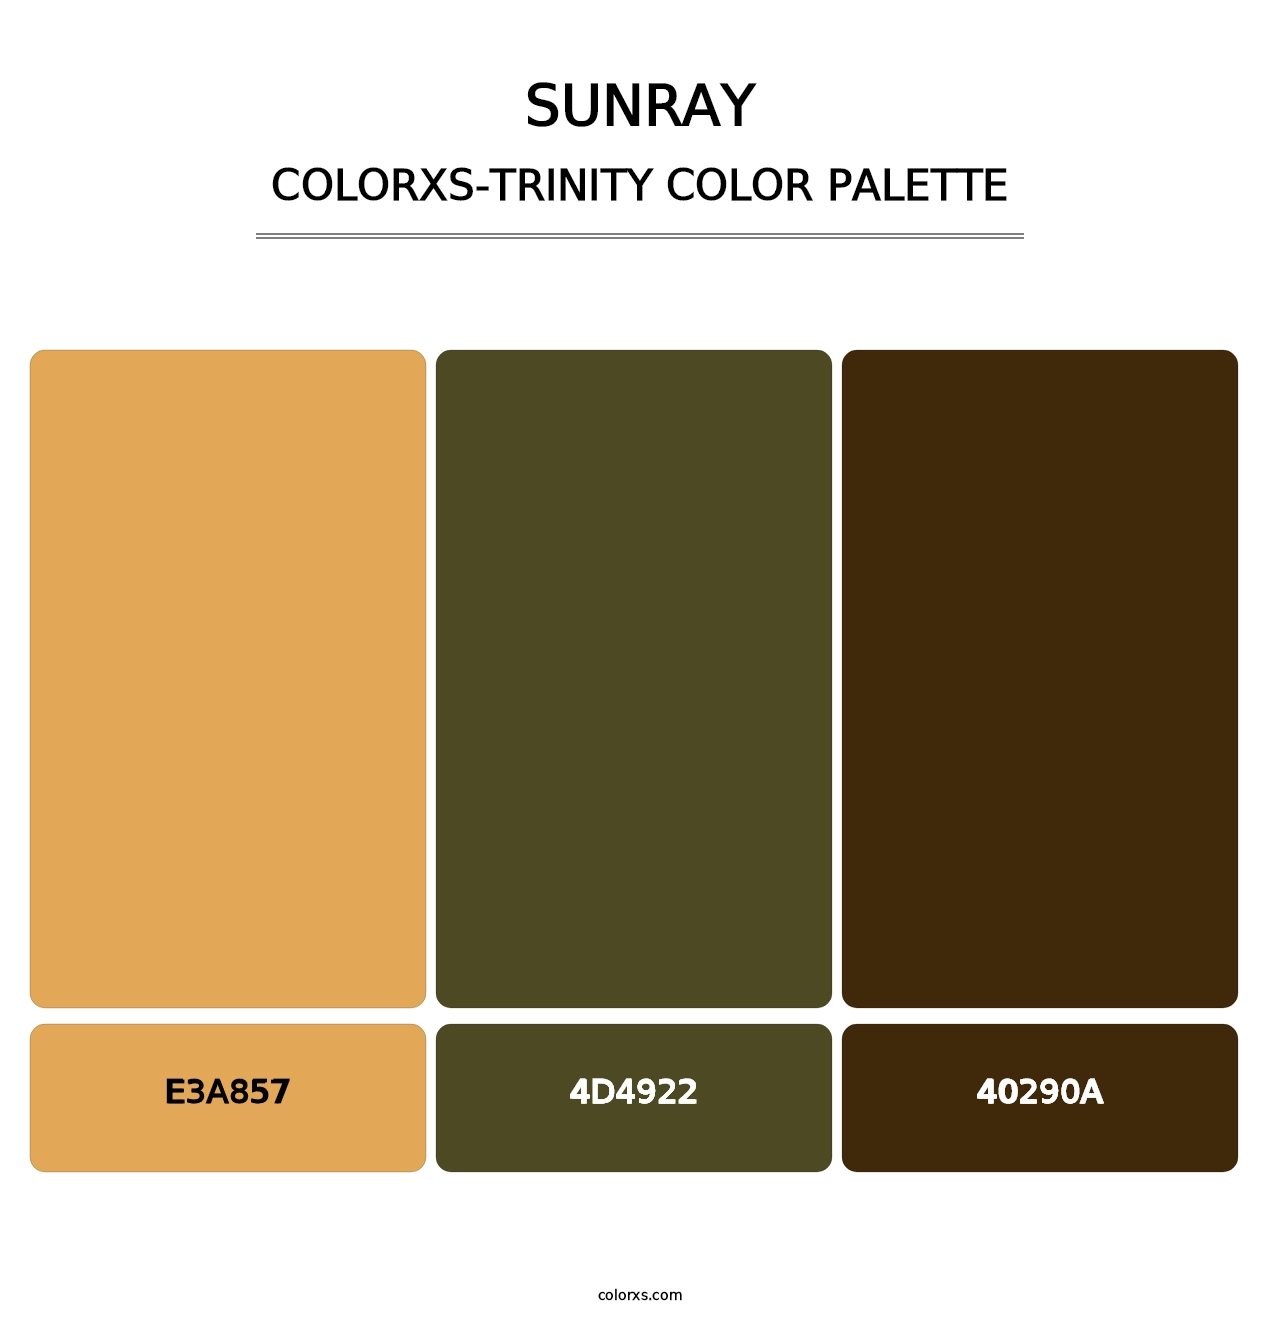 Sunray - Colorxs Trinity Palette